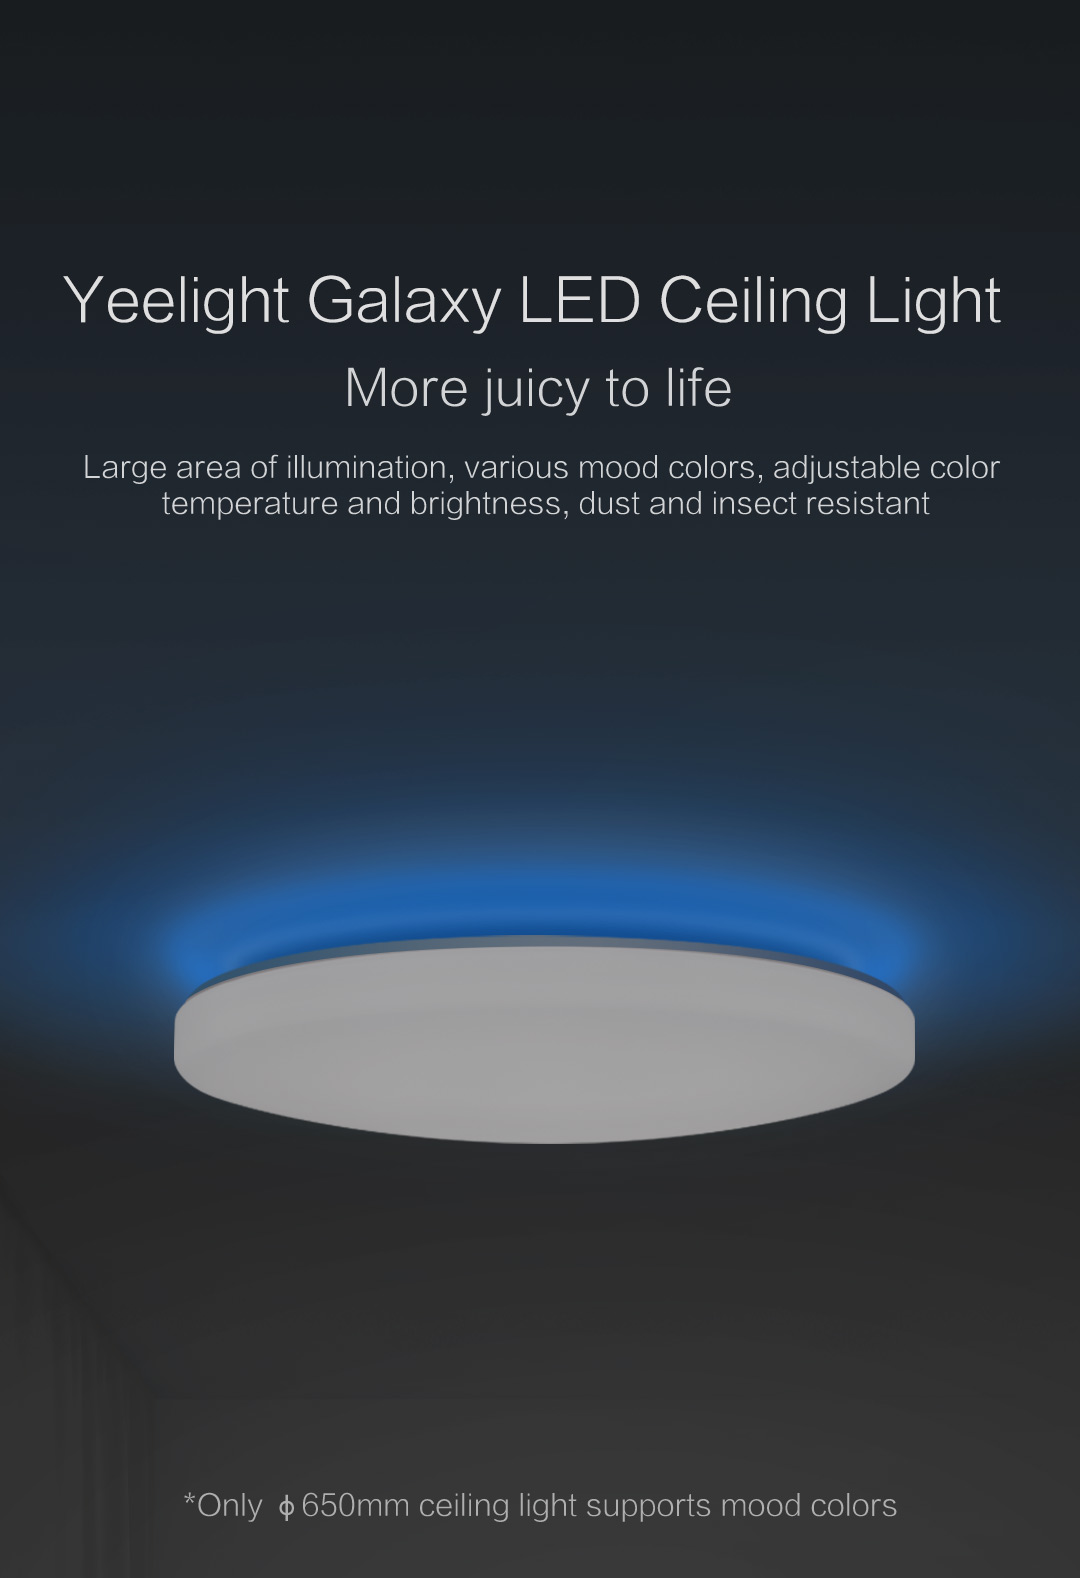 Galaxy LED Ceiling Light-Yeelight Galaxy LED Ceiling Light-Yeelight